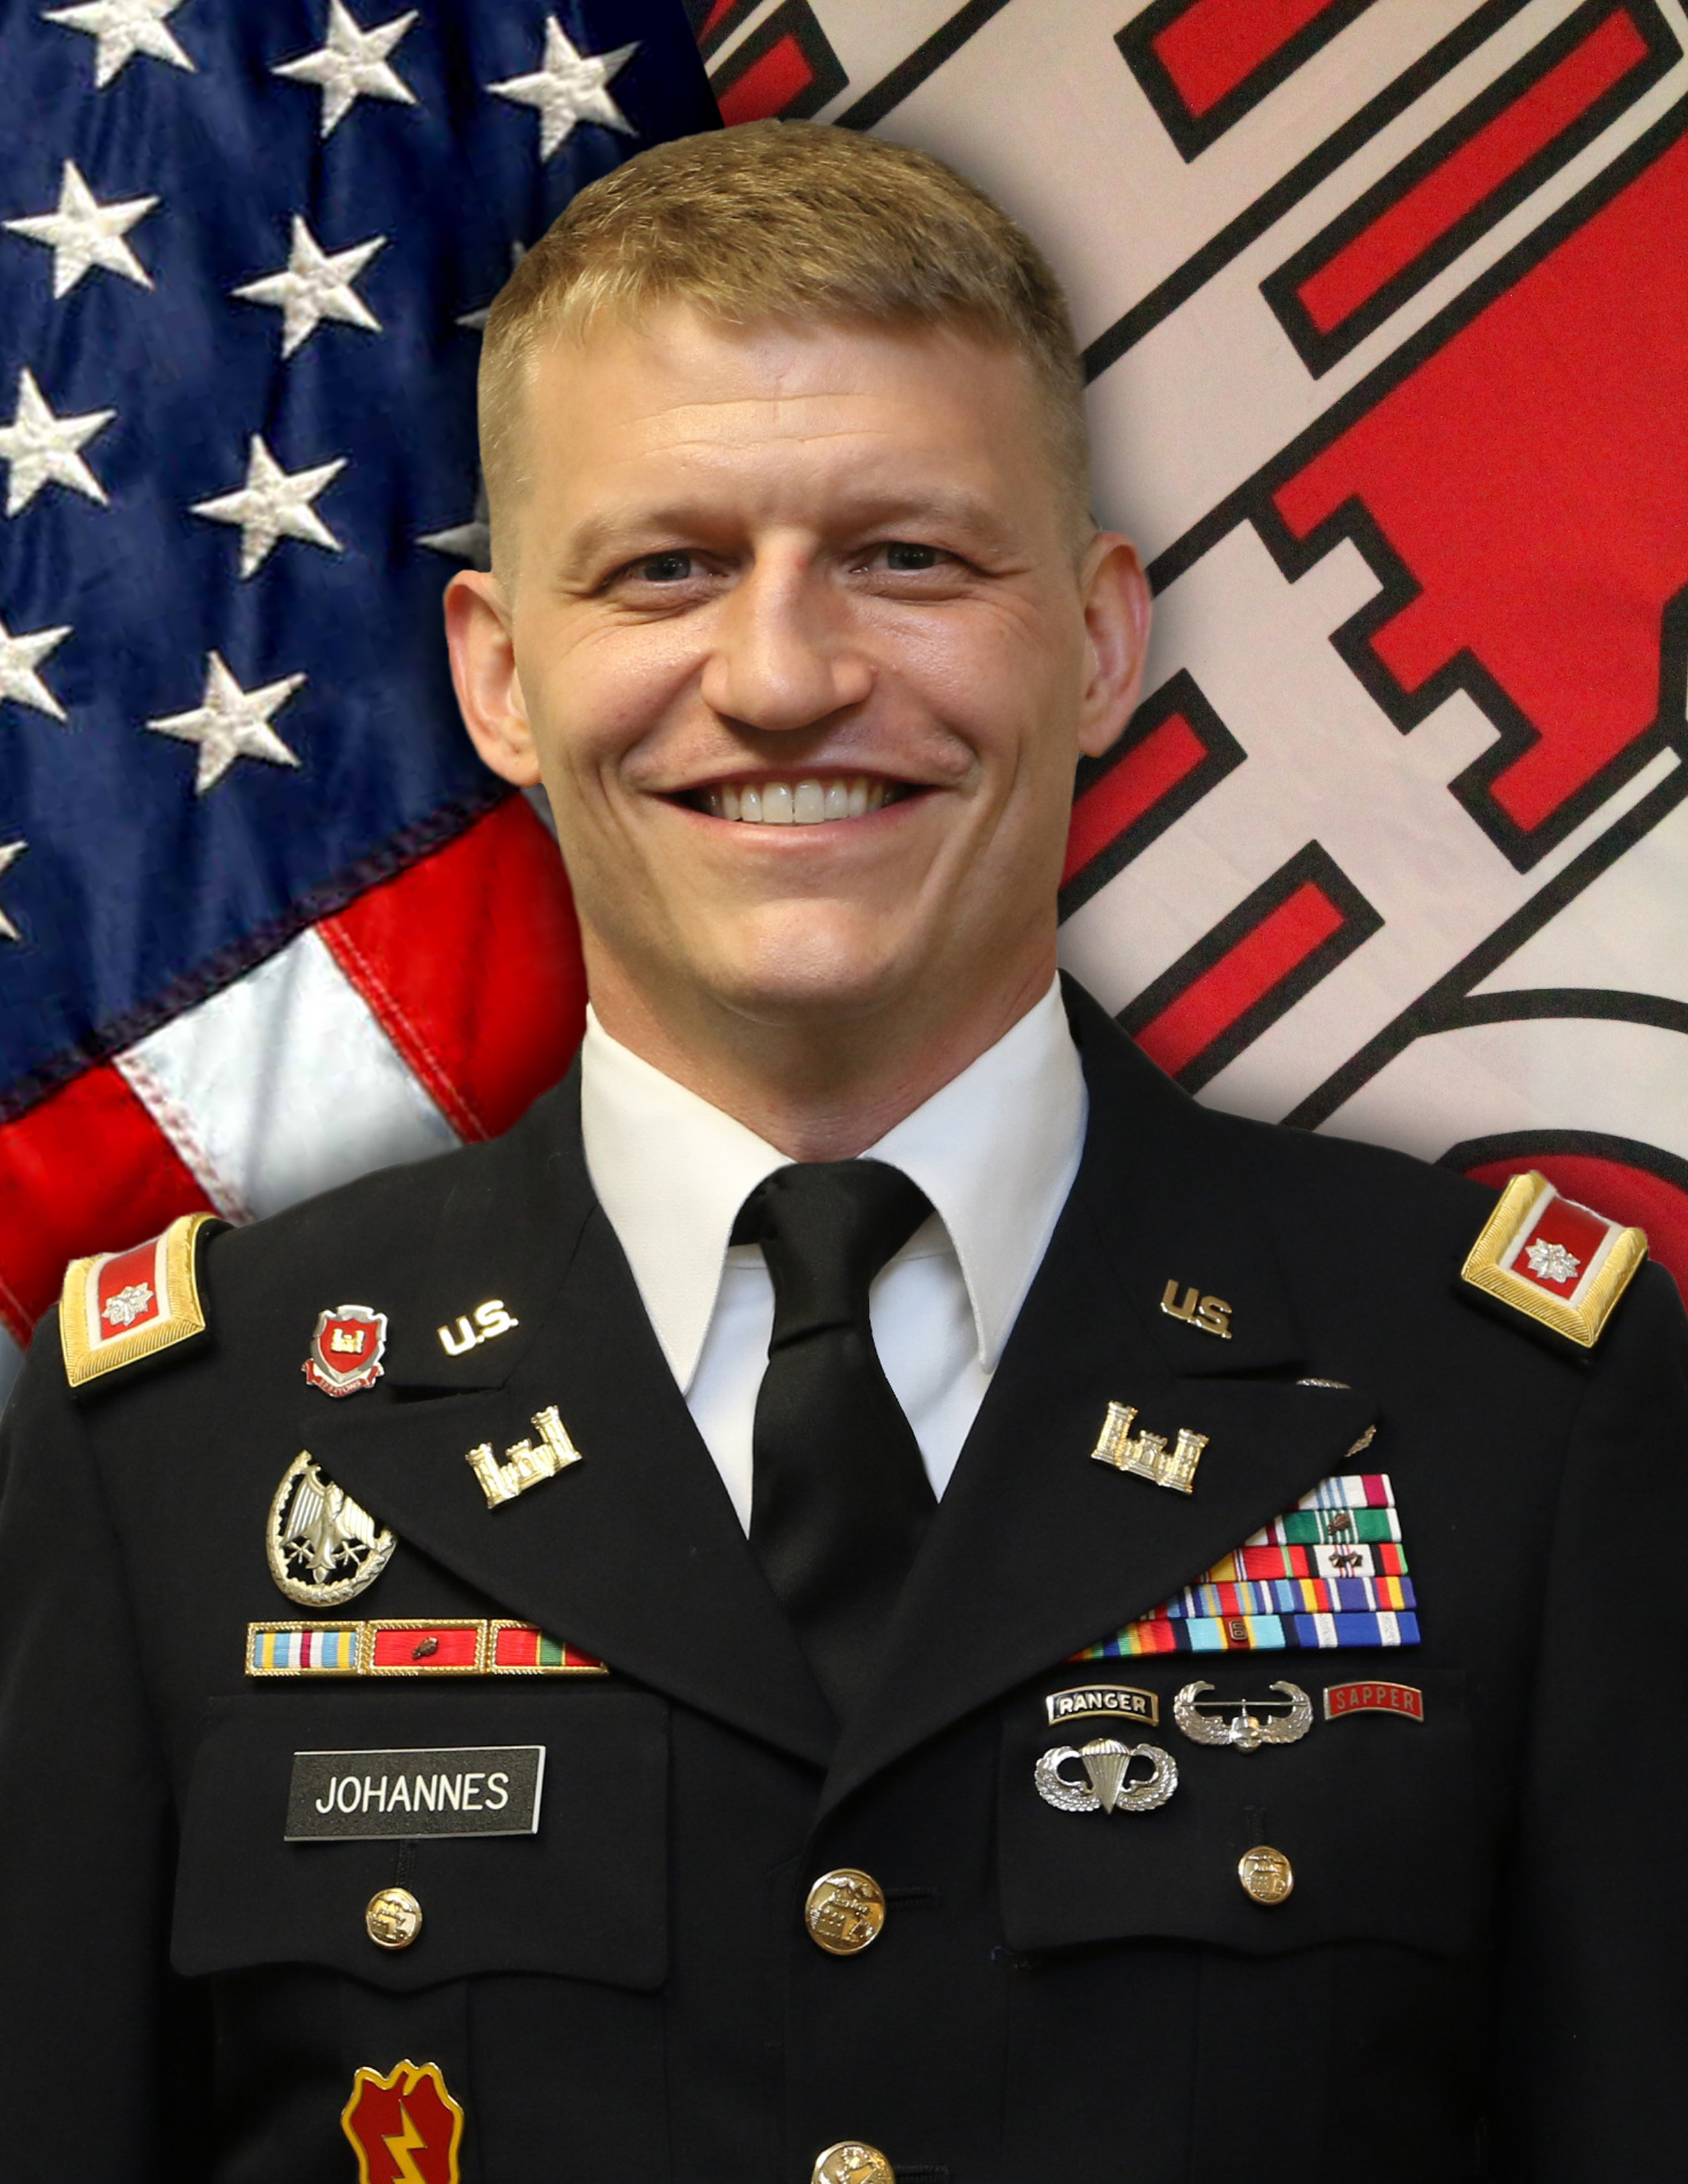 Lt. Col. Andrew Johannes